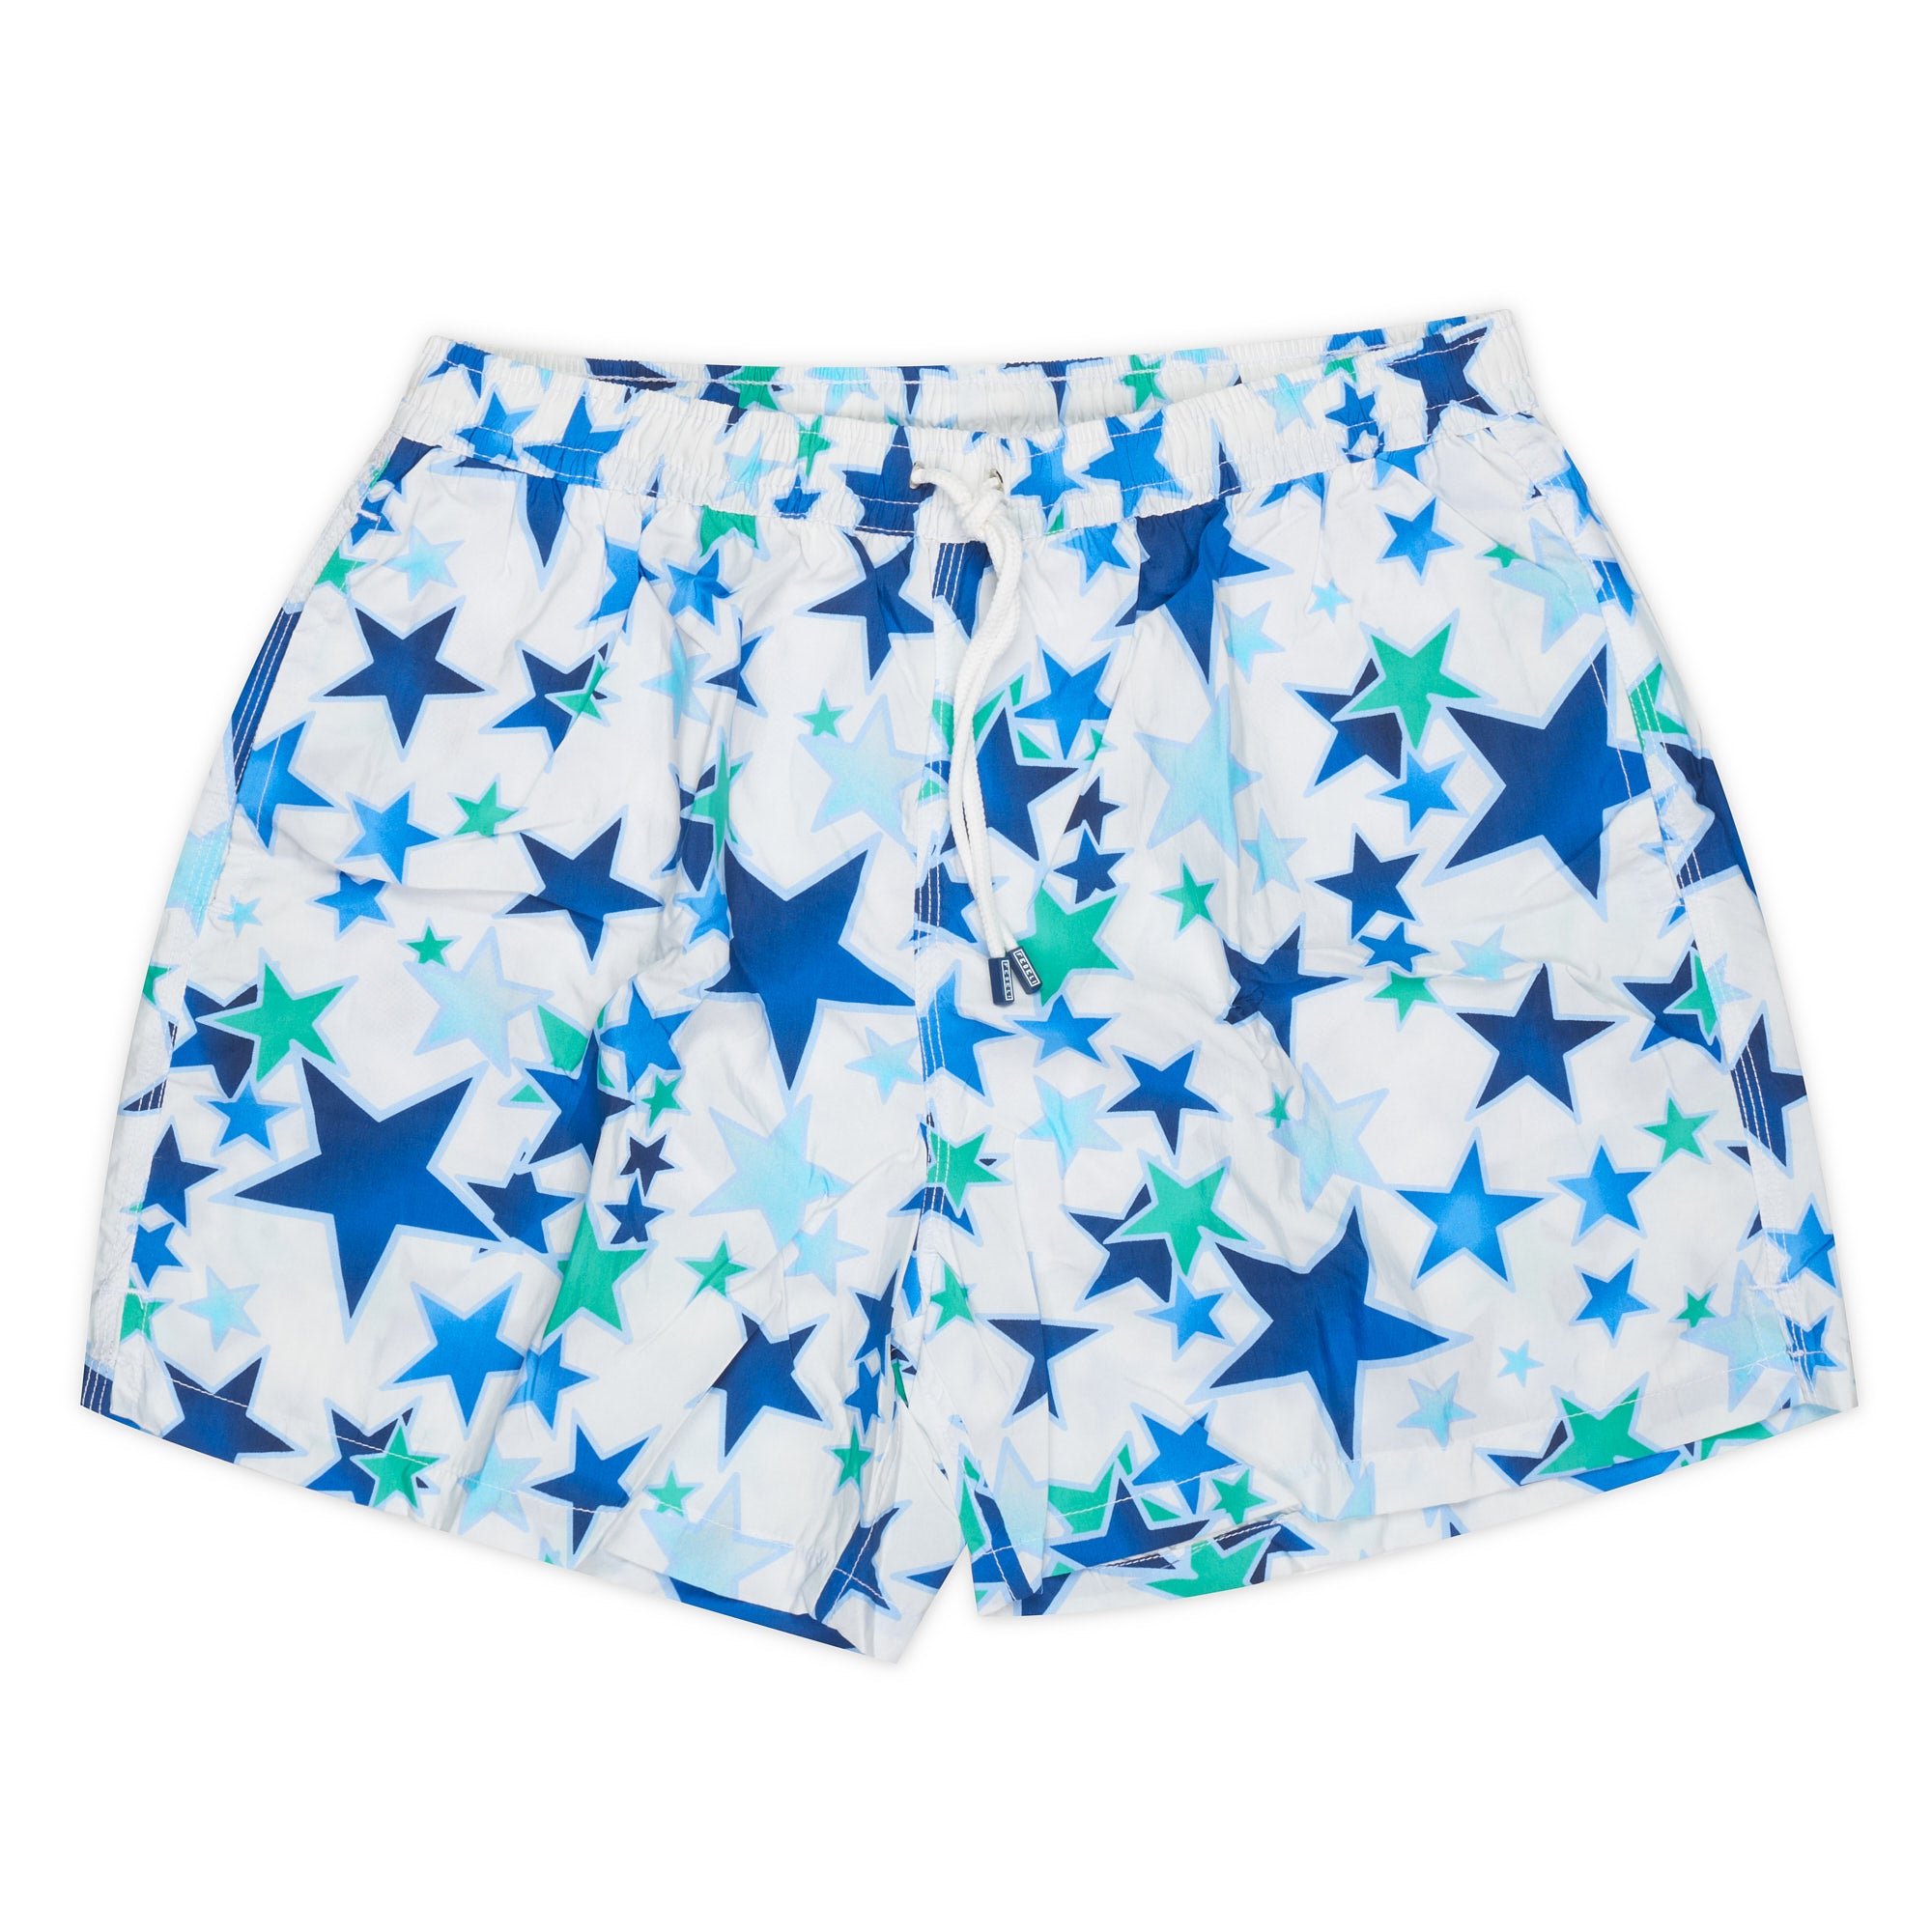 FEDELI White Star Print "Costume" Airstop Swim Shorts Trunks NEW 2XL FEDELI